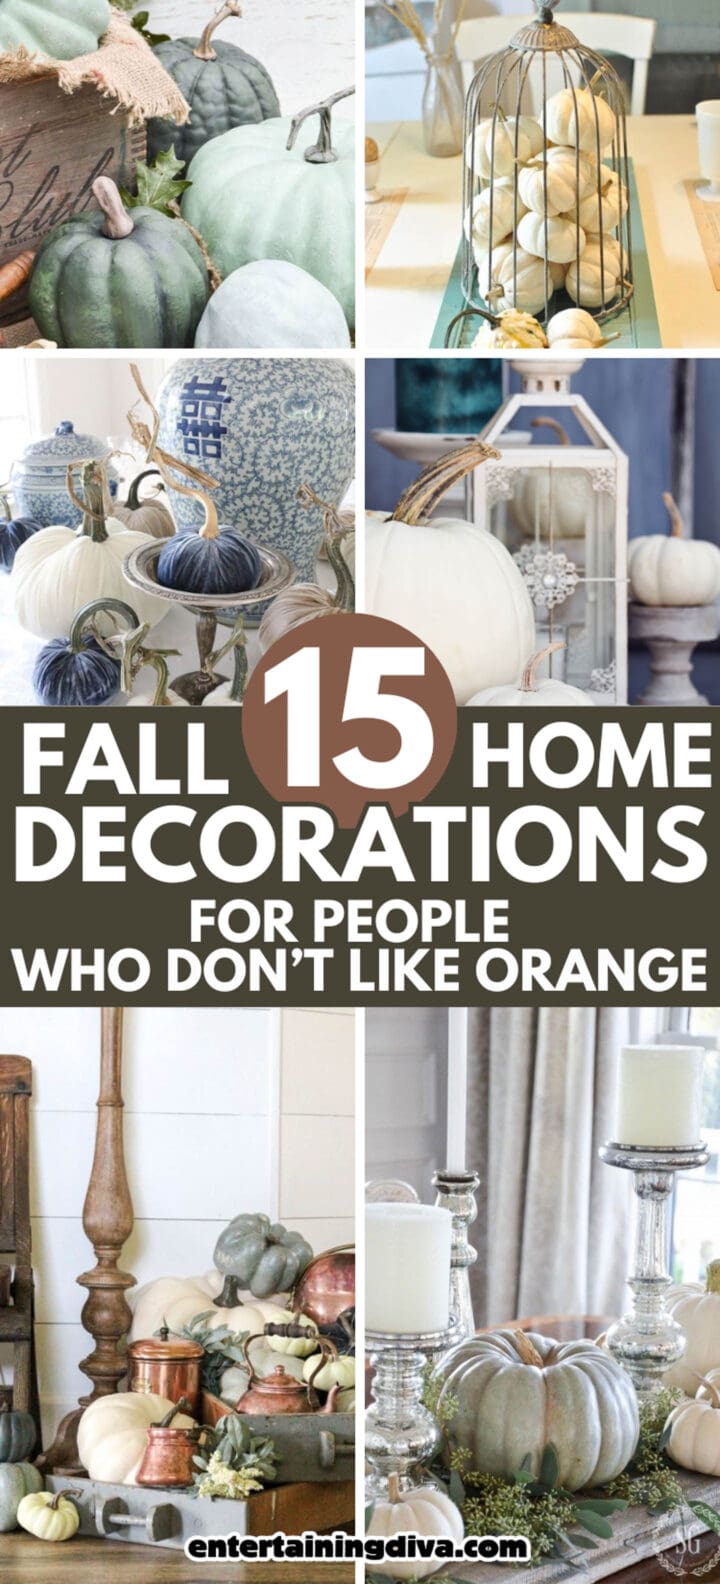 15 fall home decor ideas that avoid orange.